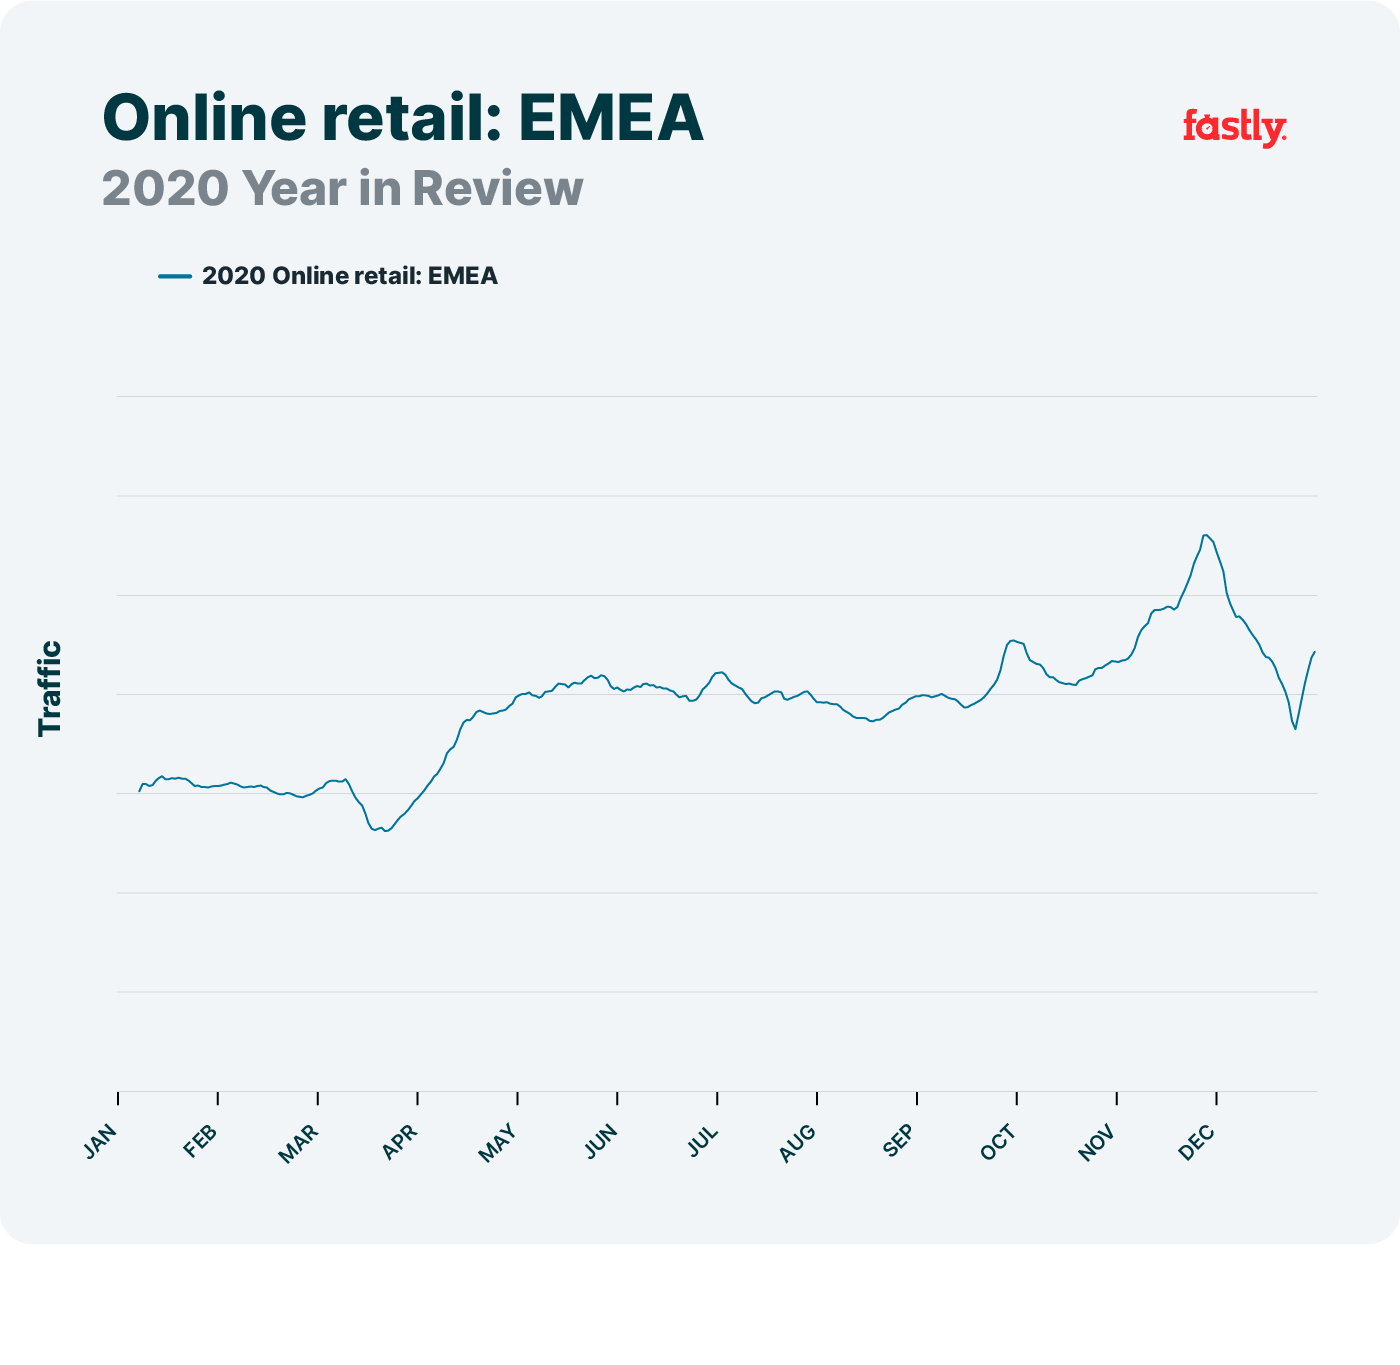 Online retail, EMEA, network trends 2020